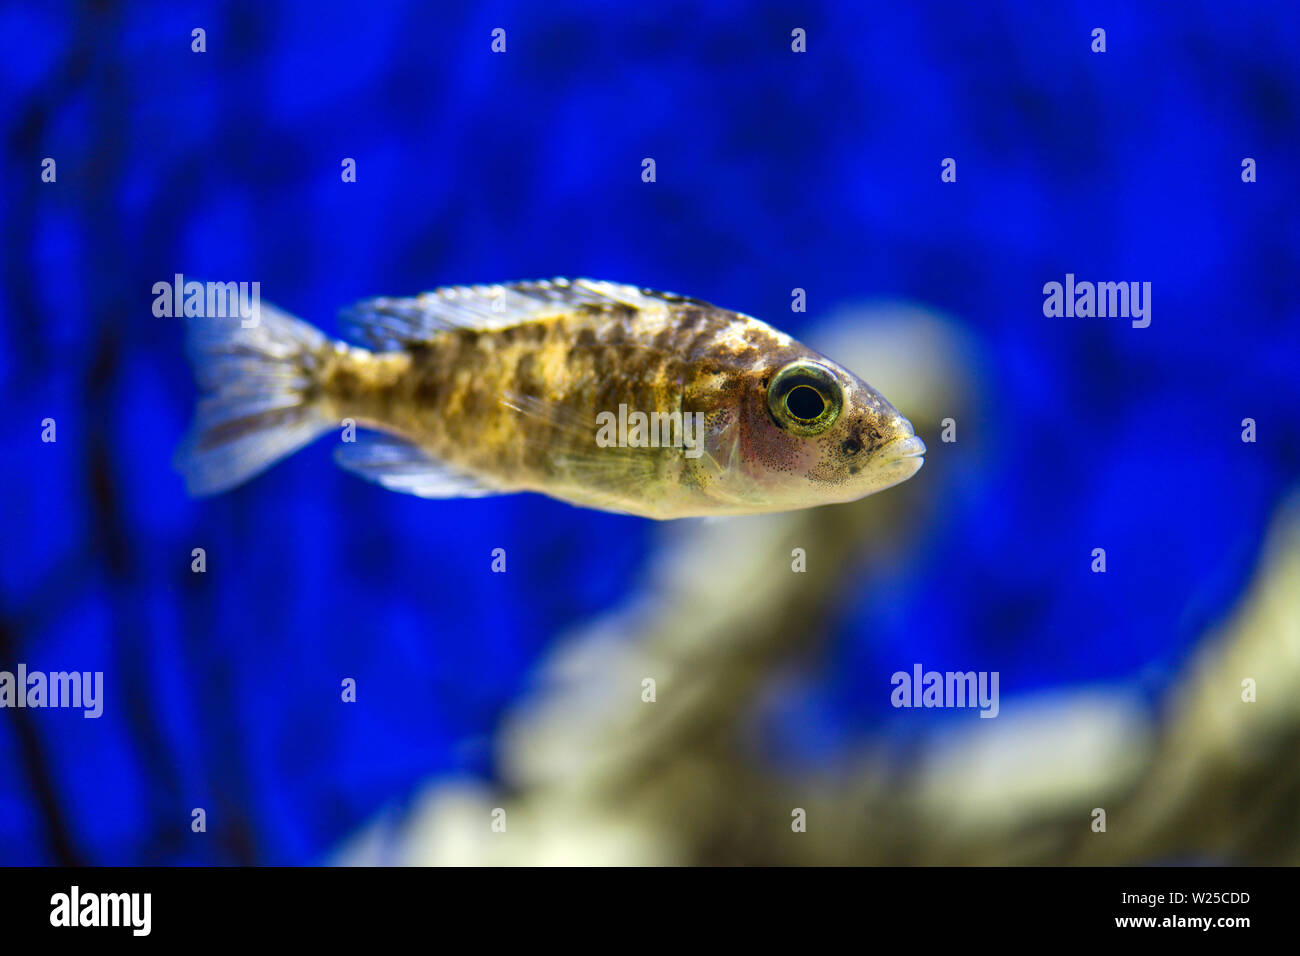 Cichlid fish swims in a transparent aquarium with blue decoration Stock Photo